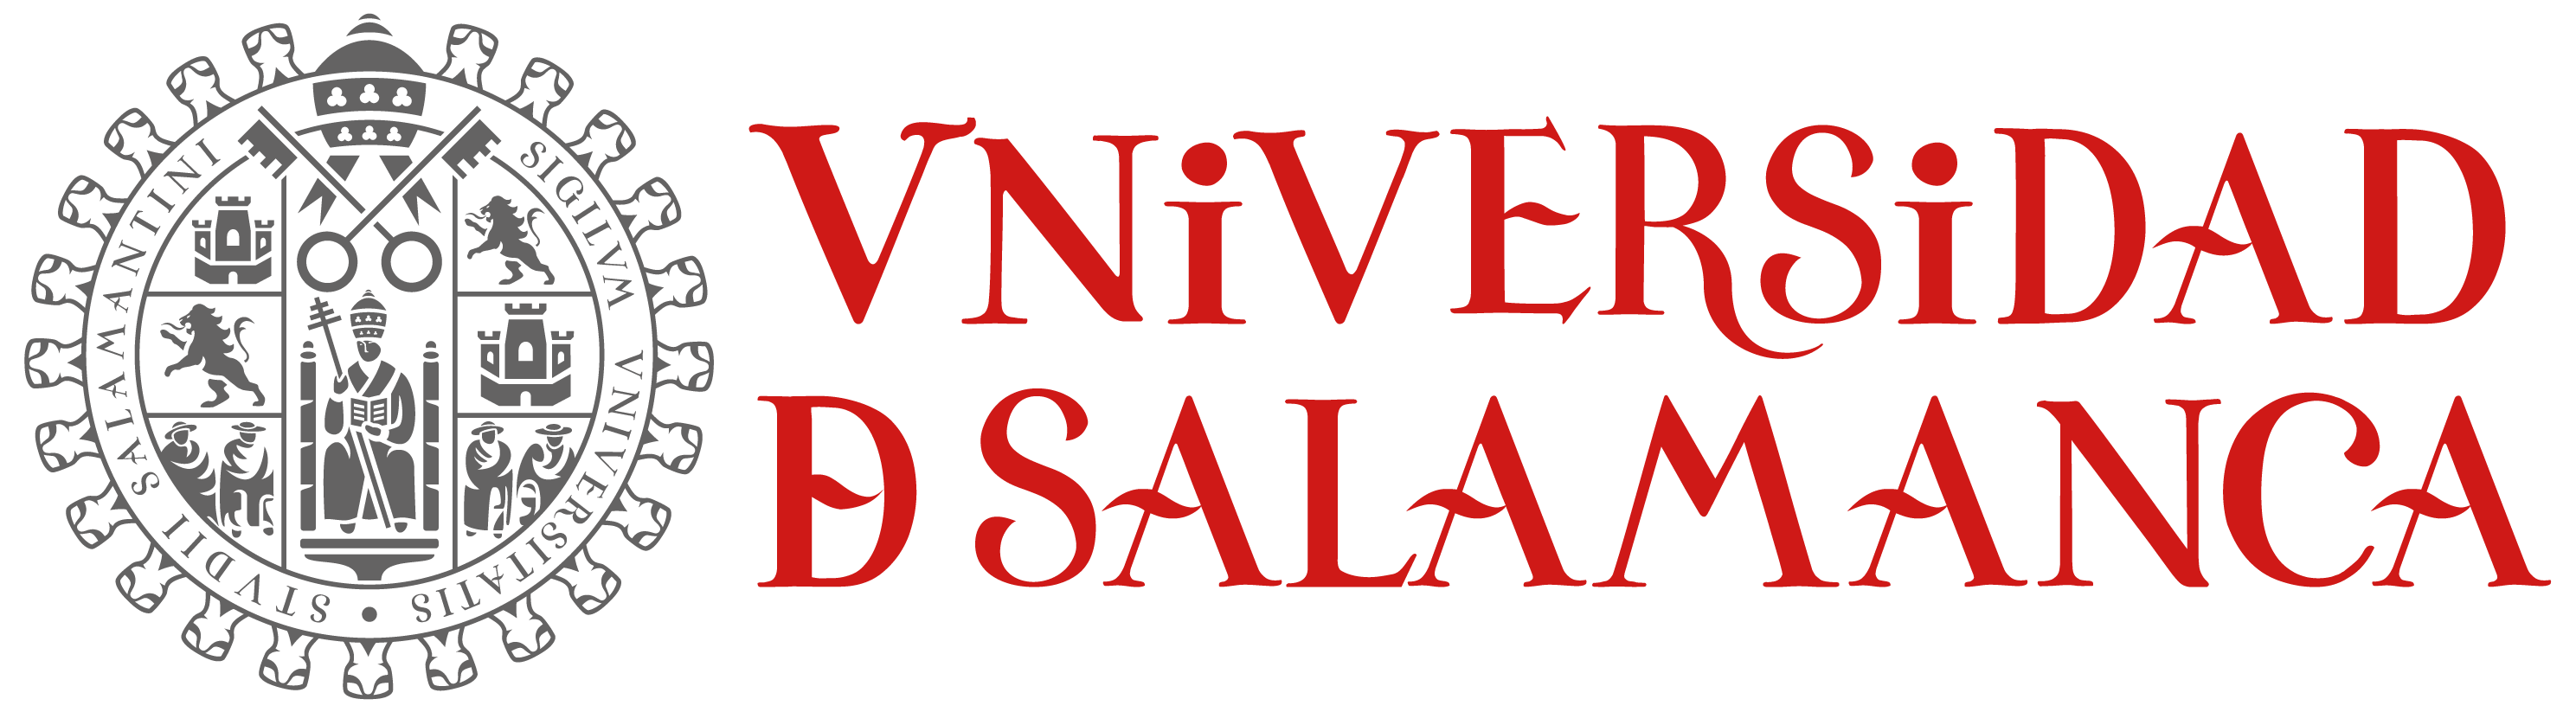 marca Universidad de Salamanca